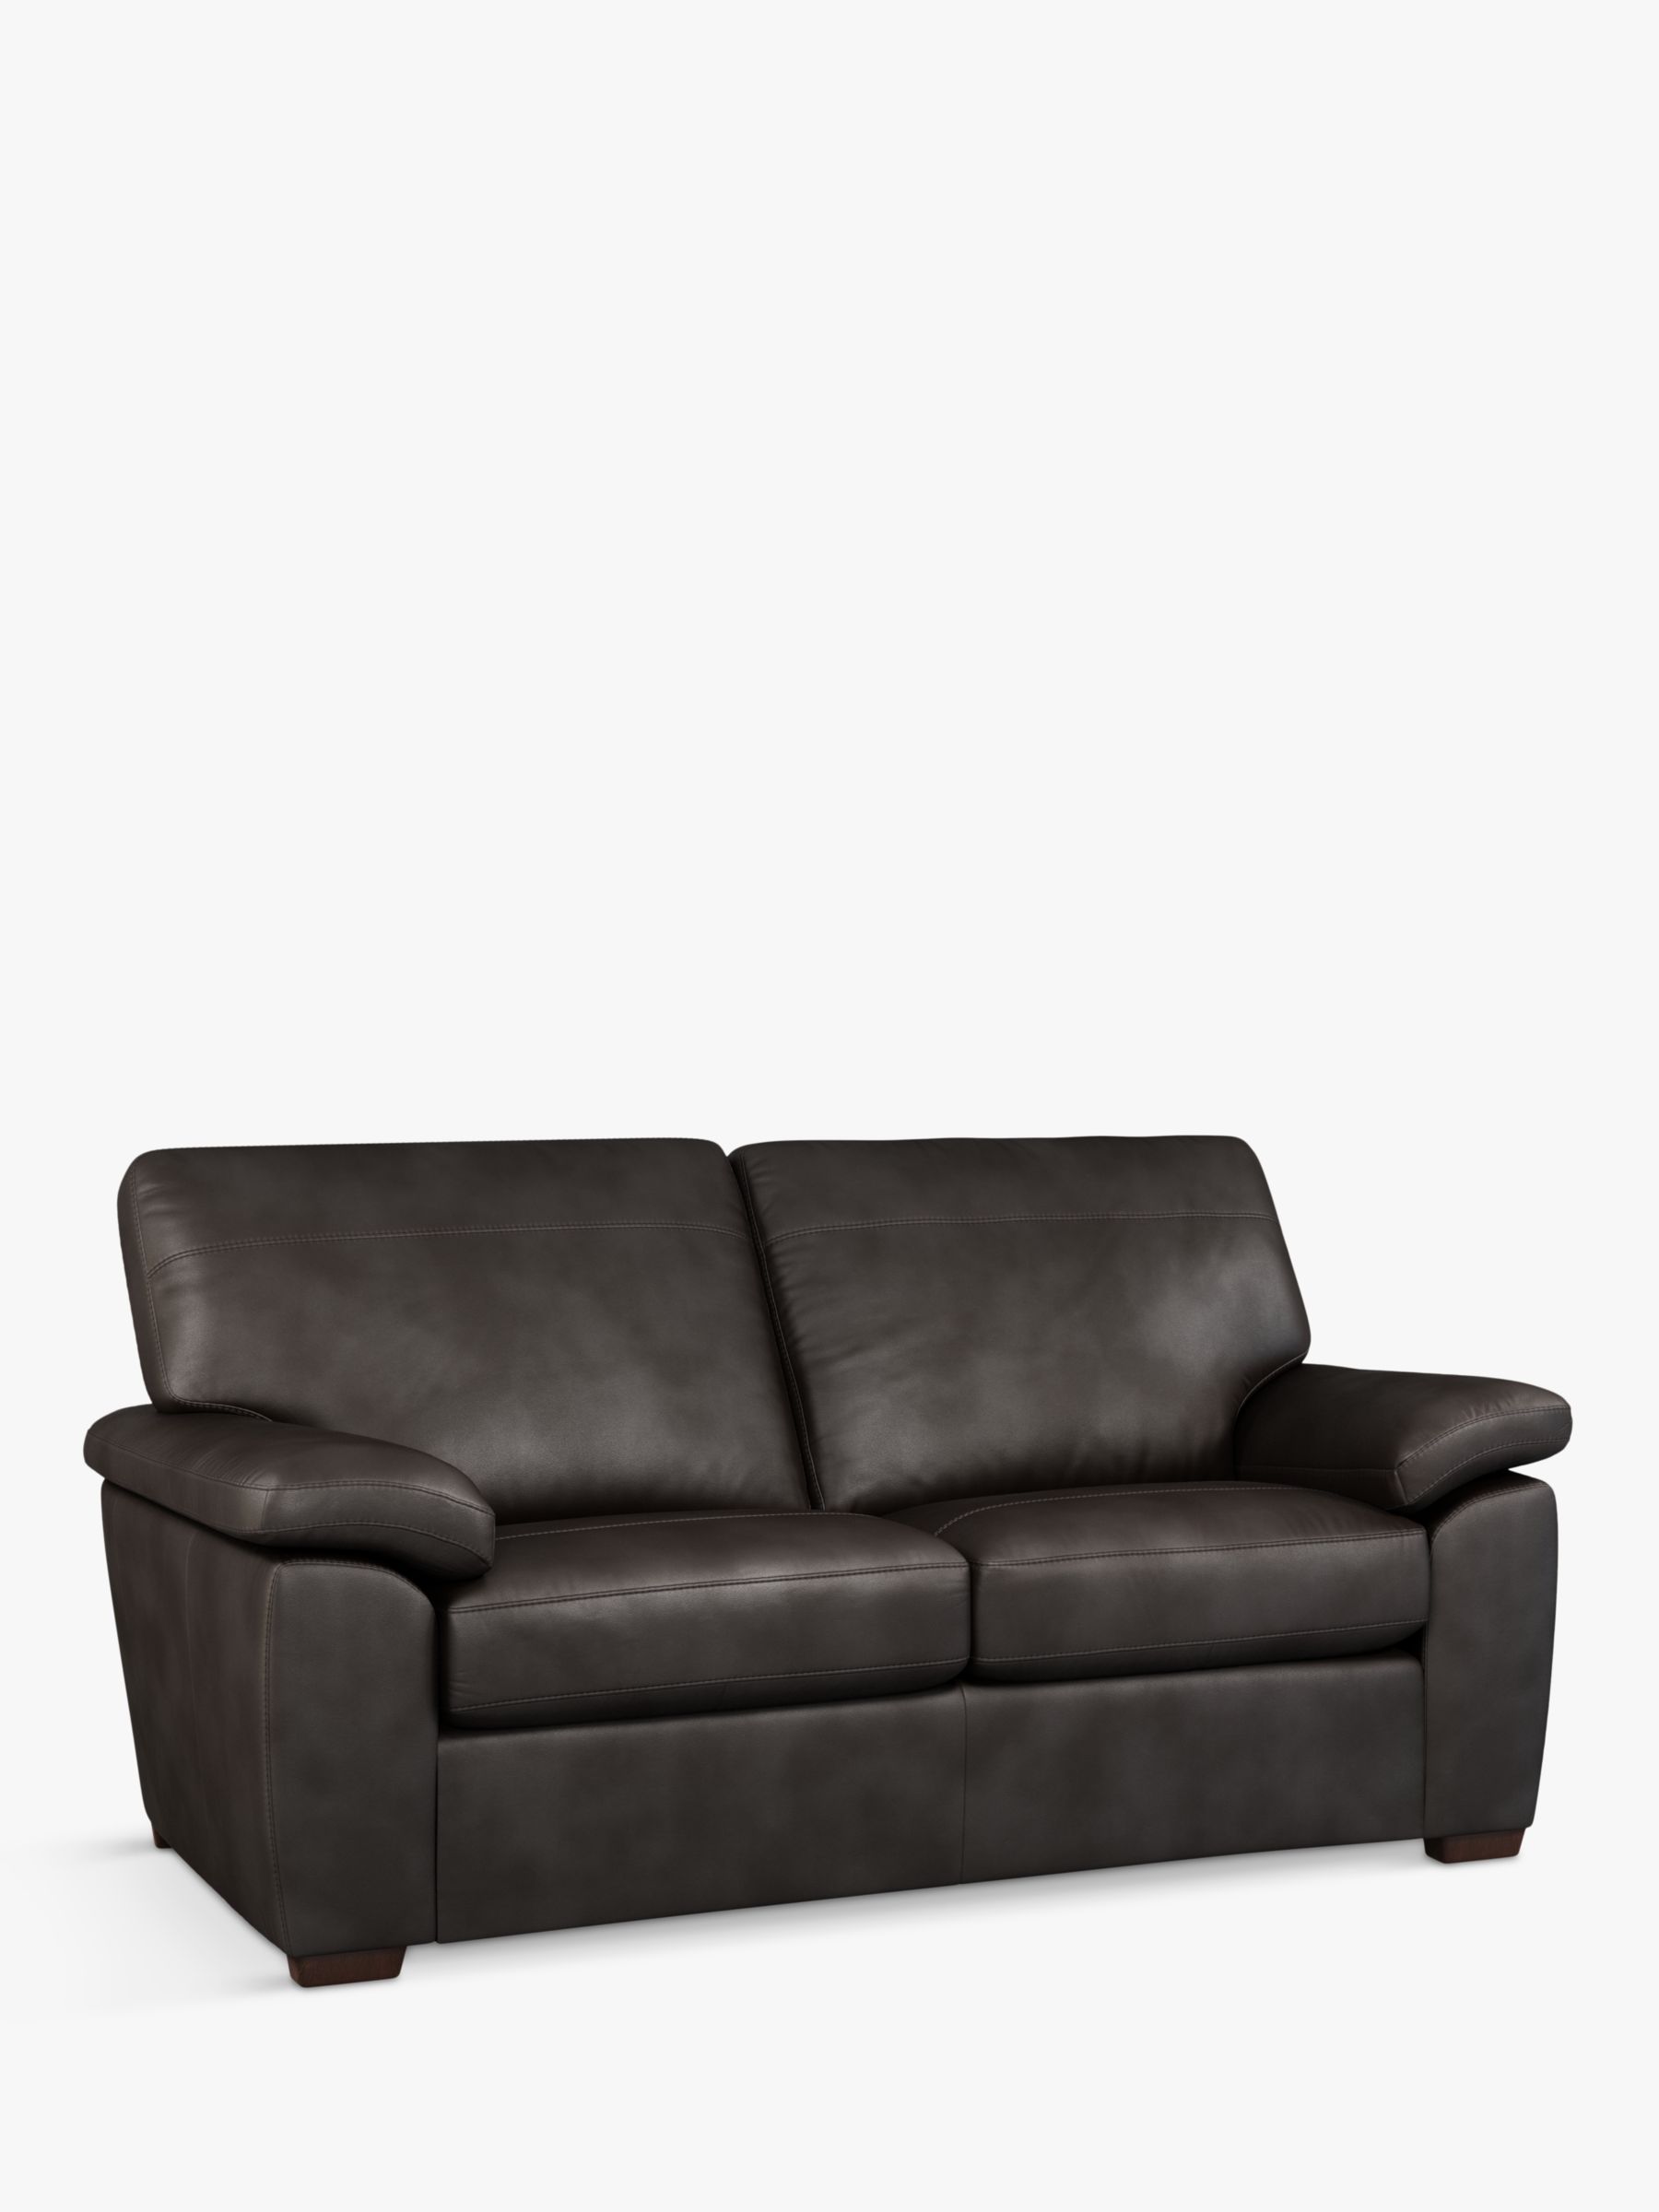 Camden Range, John Lewis Camden Medium 2 Seater Leather Sofa Bed, Dark Leg, Contempo Dark Chocolate